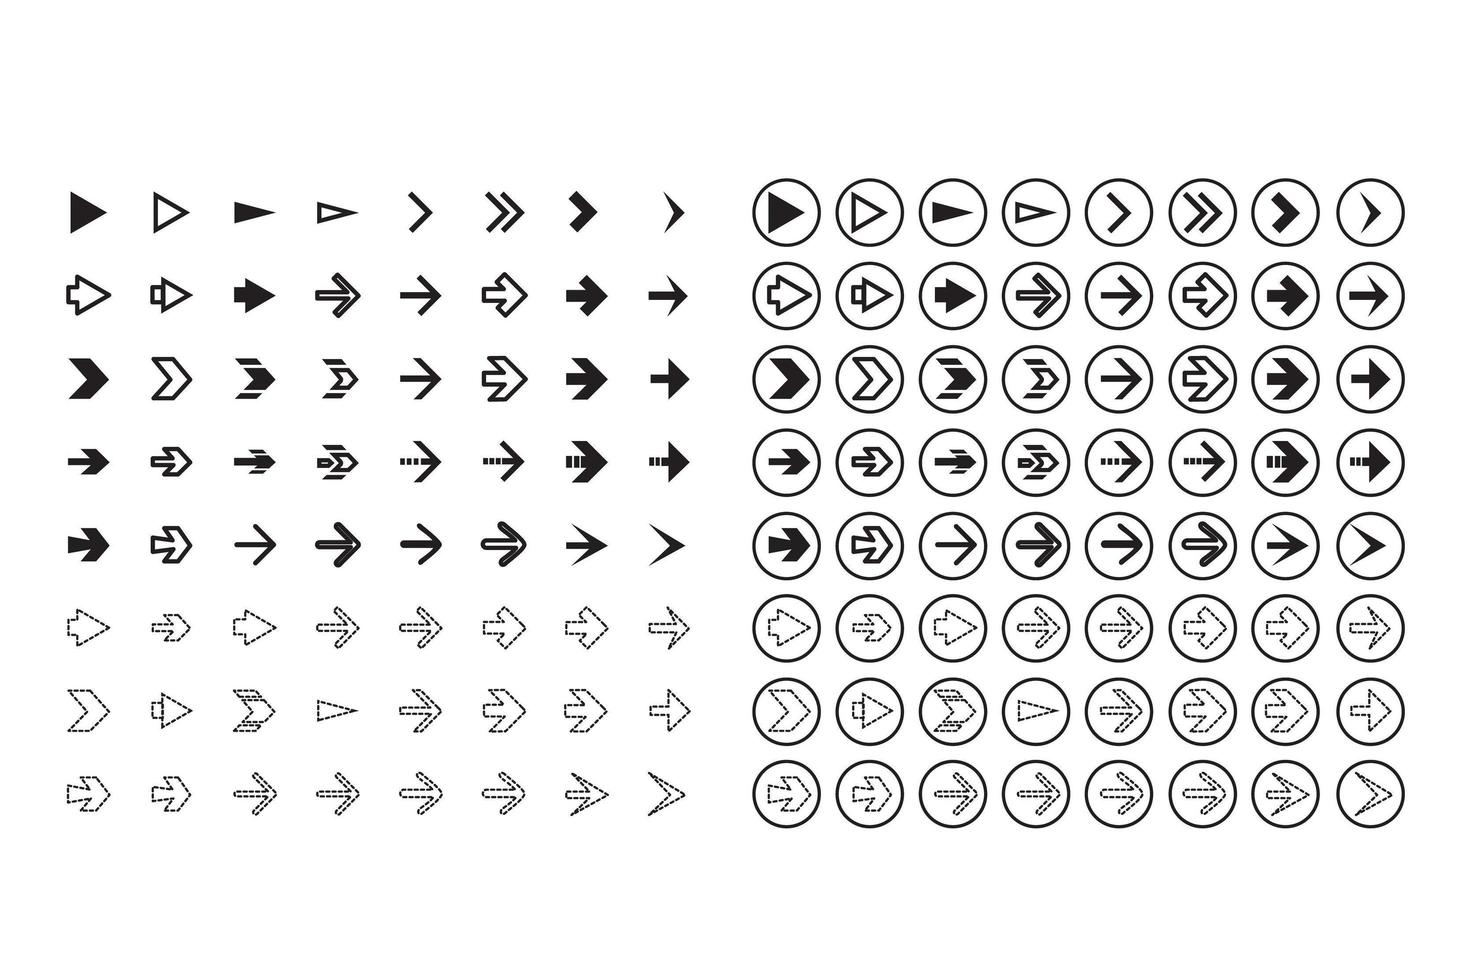 Isolated arrows set, undo and previous buttons vector